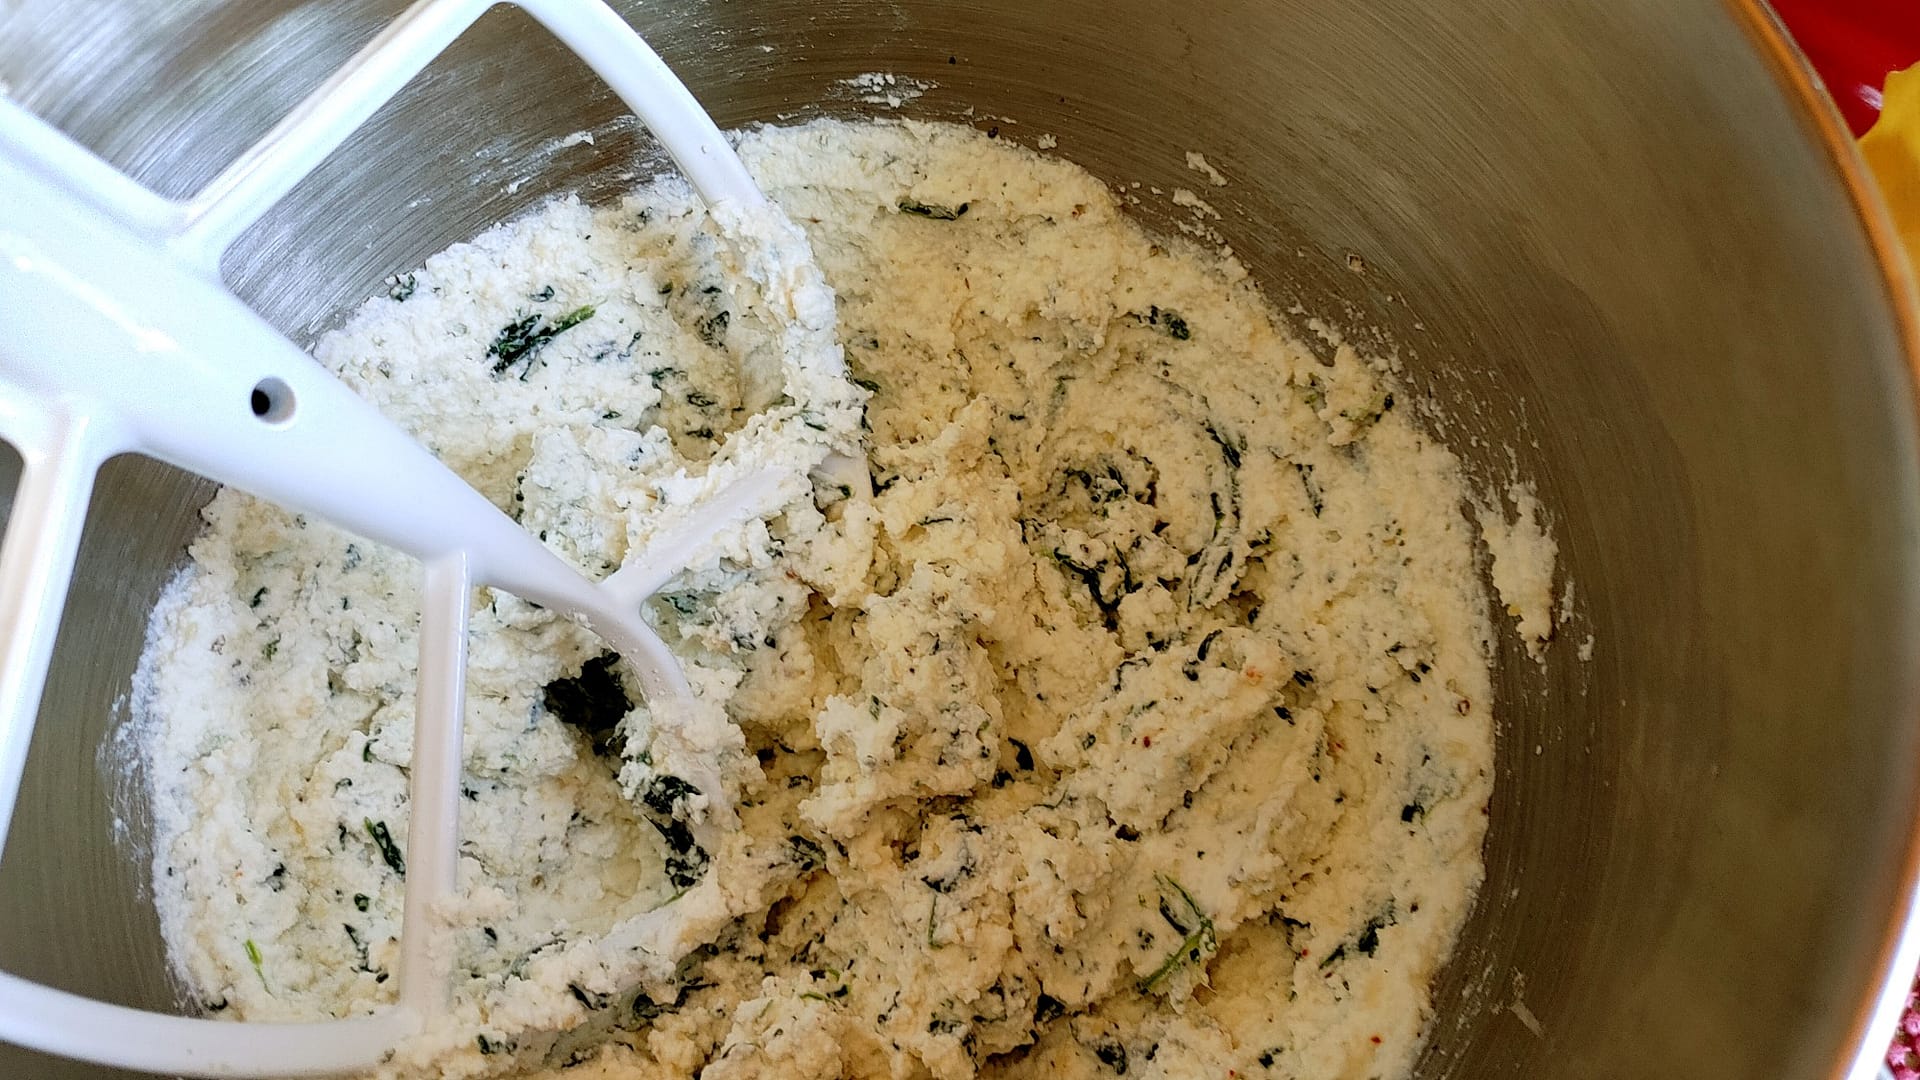 Making ravioli, More ravioli coming out of the KitchenAid r…